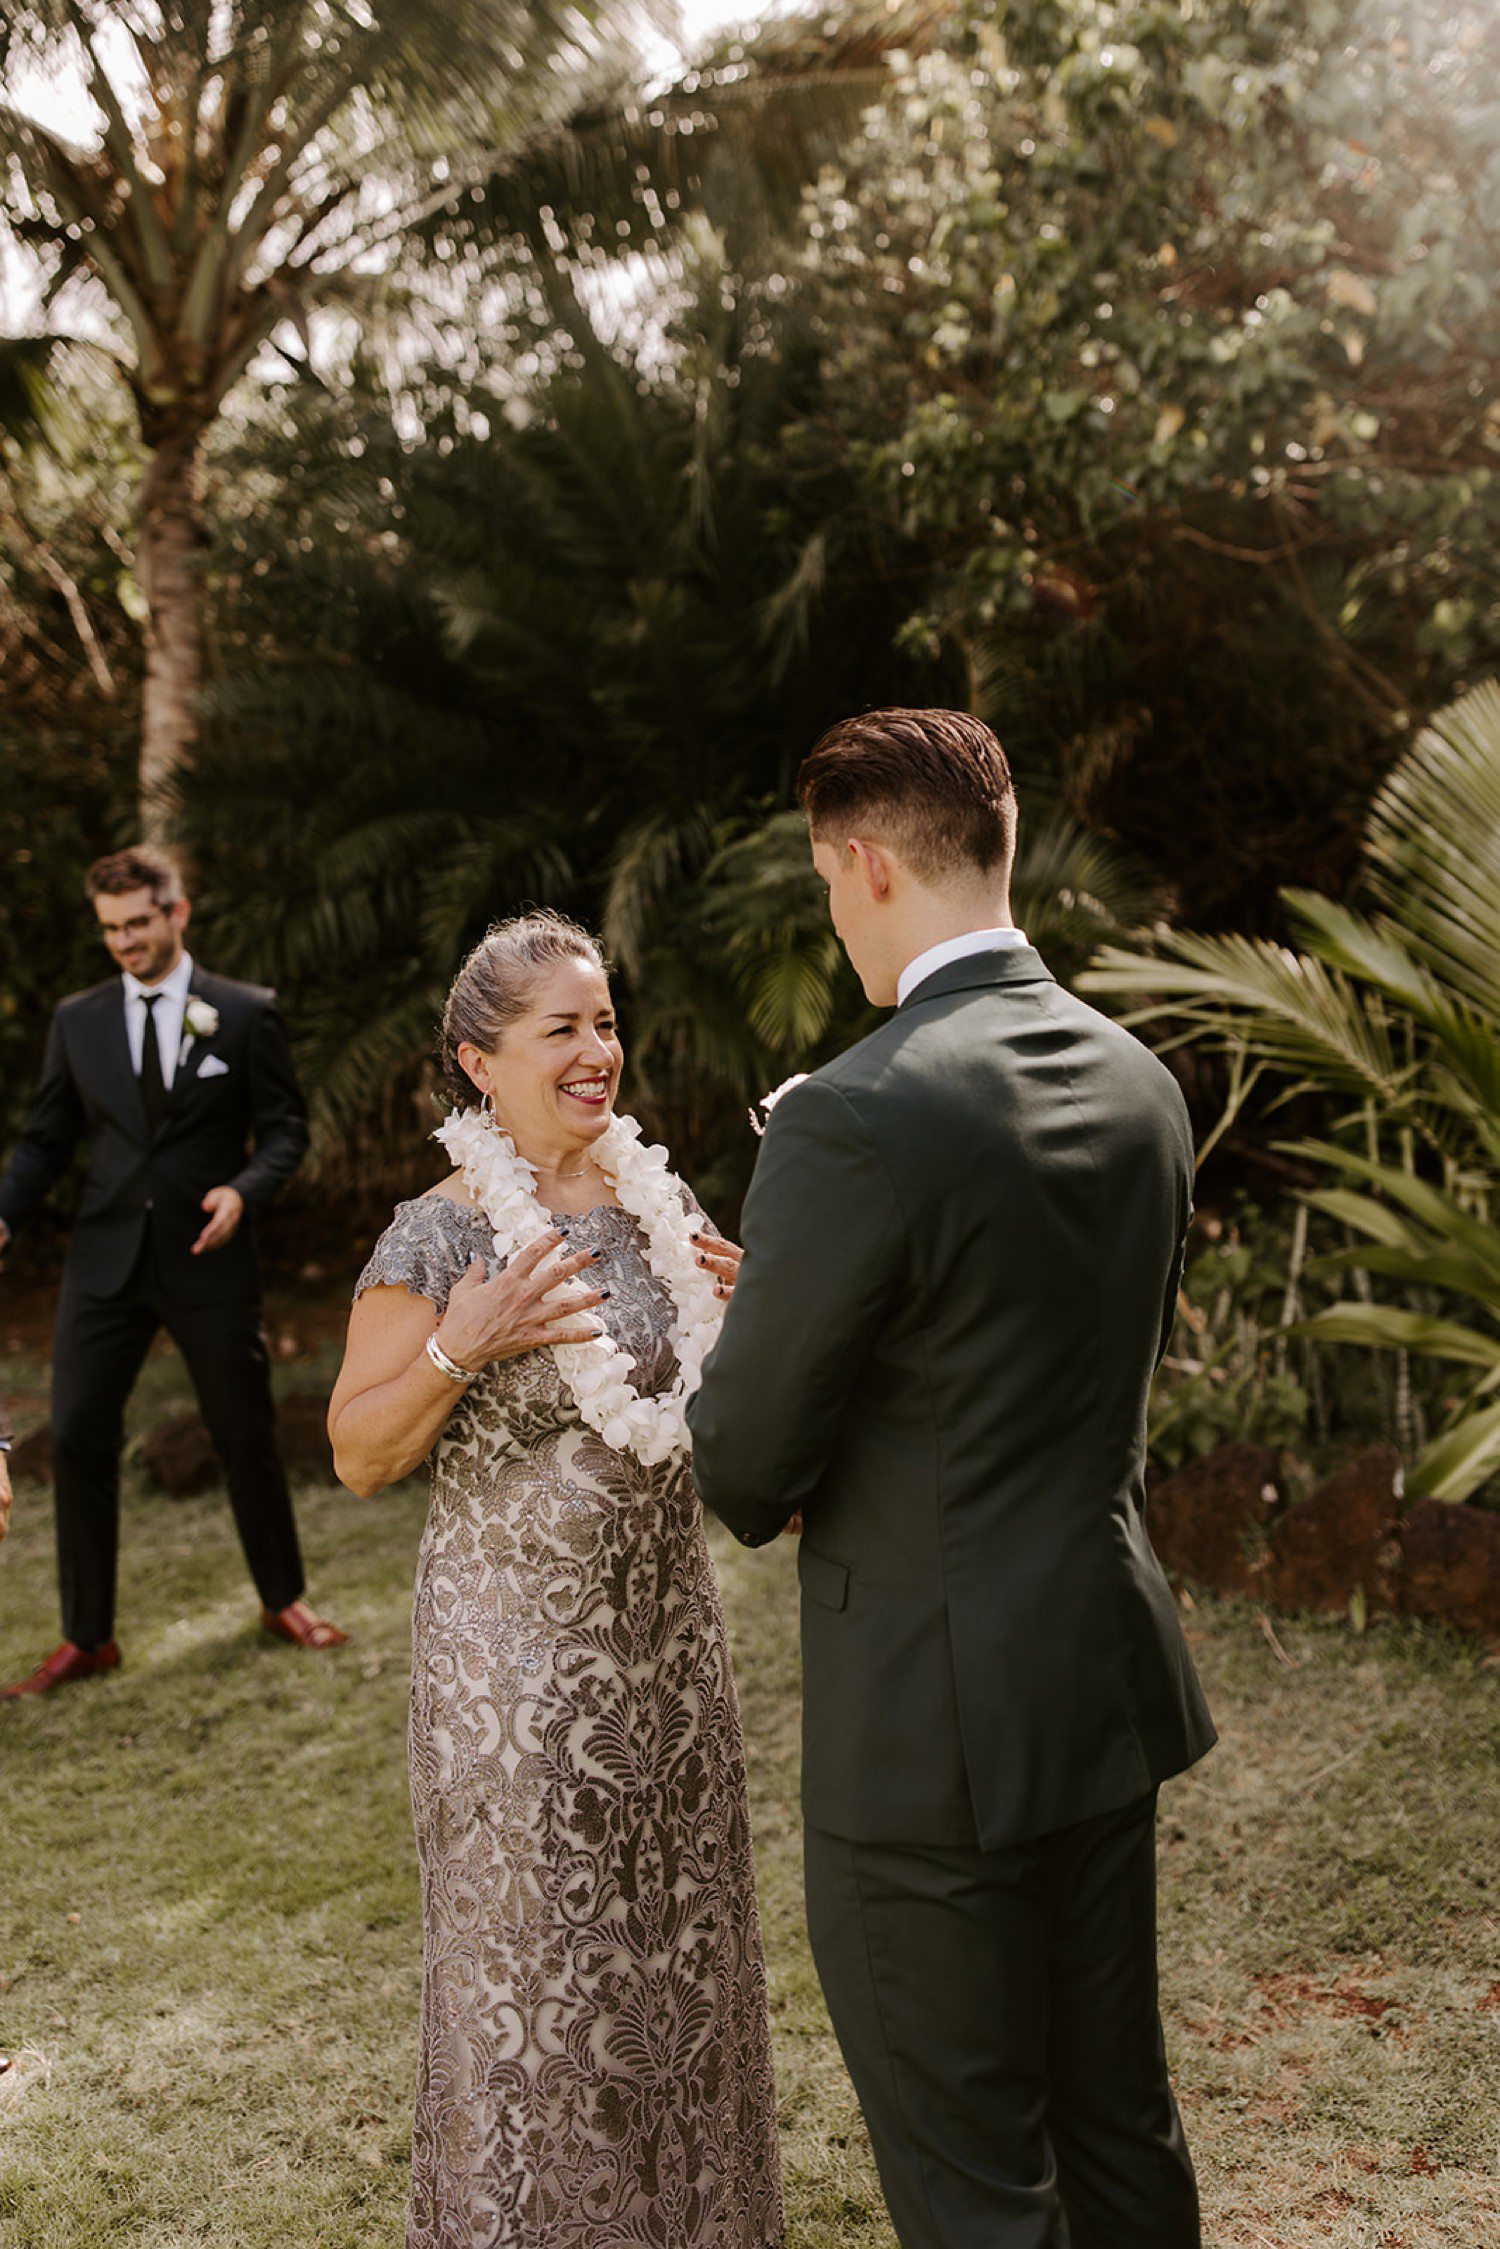 Groom honoring mom with Hawaii wedding lei